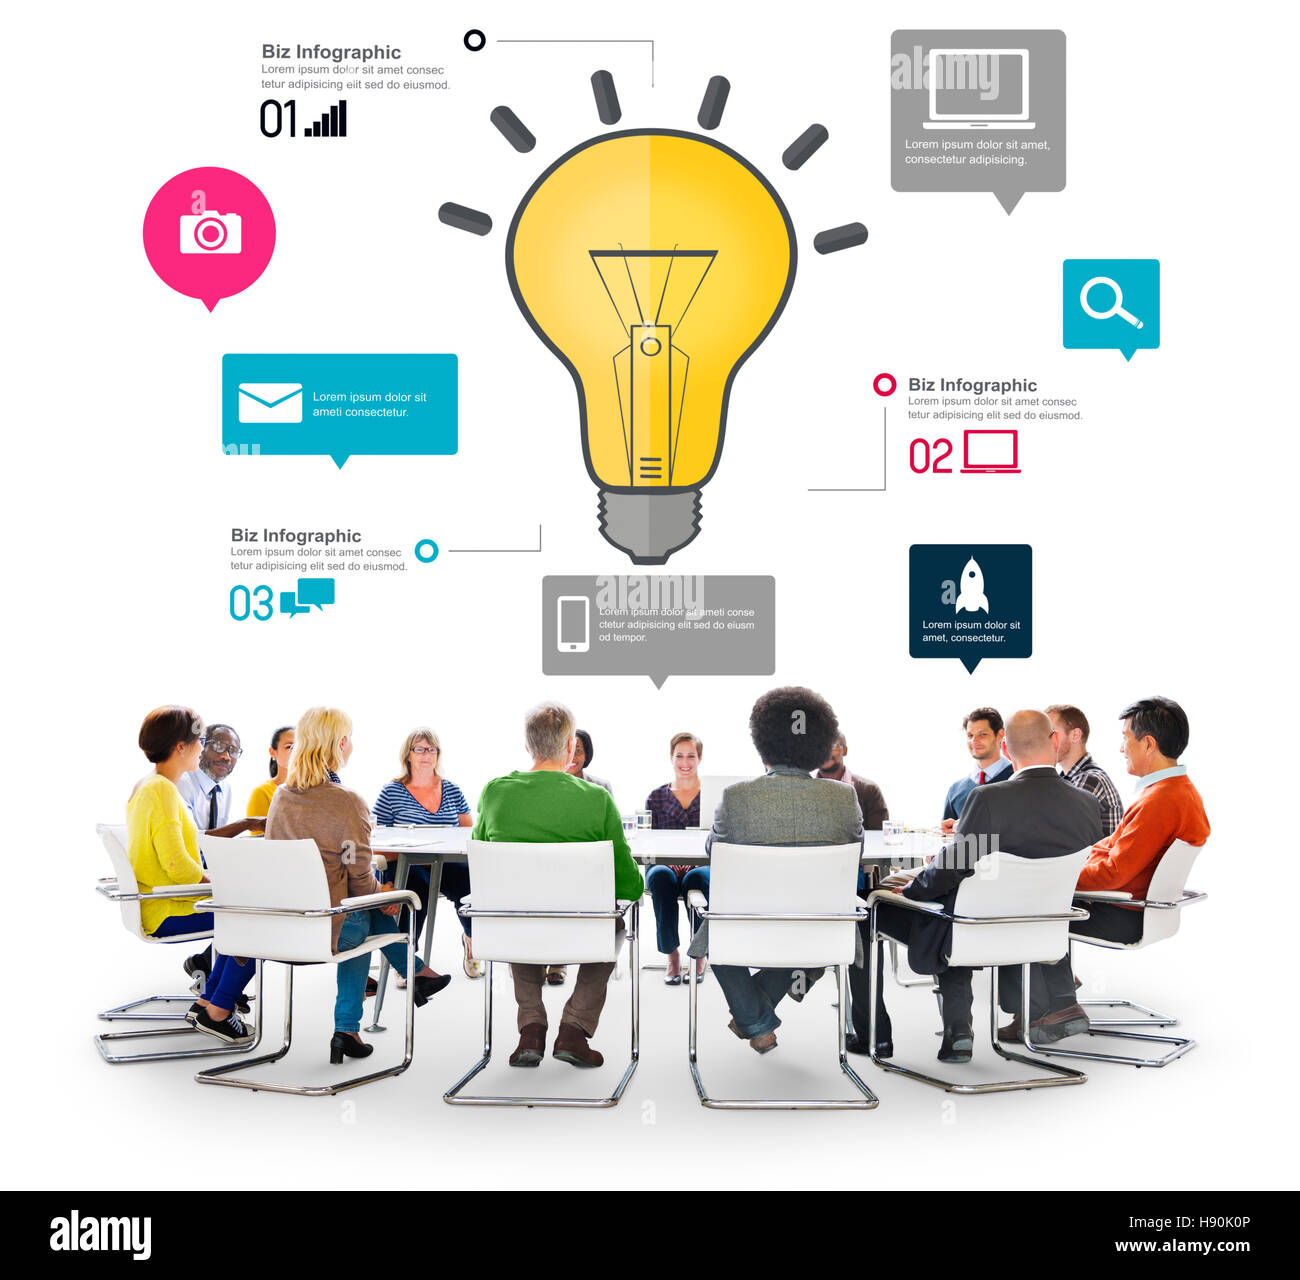 Ideas Inspiration Creativity Biz Infographic Innovation Concept Stock Photo